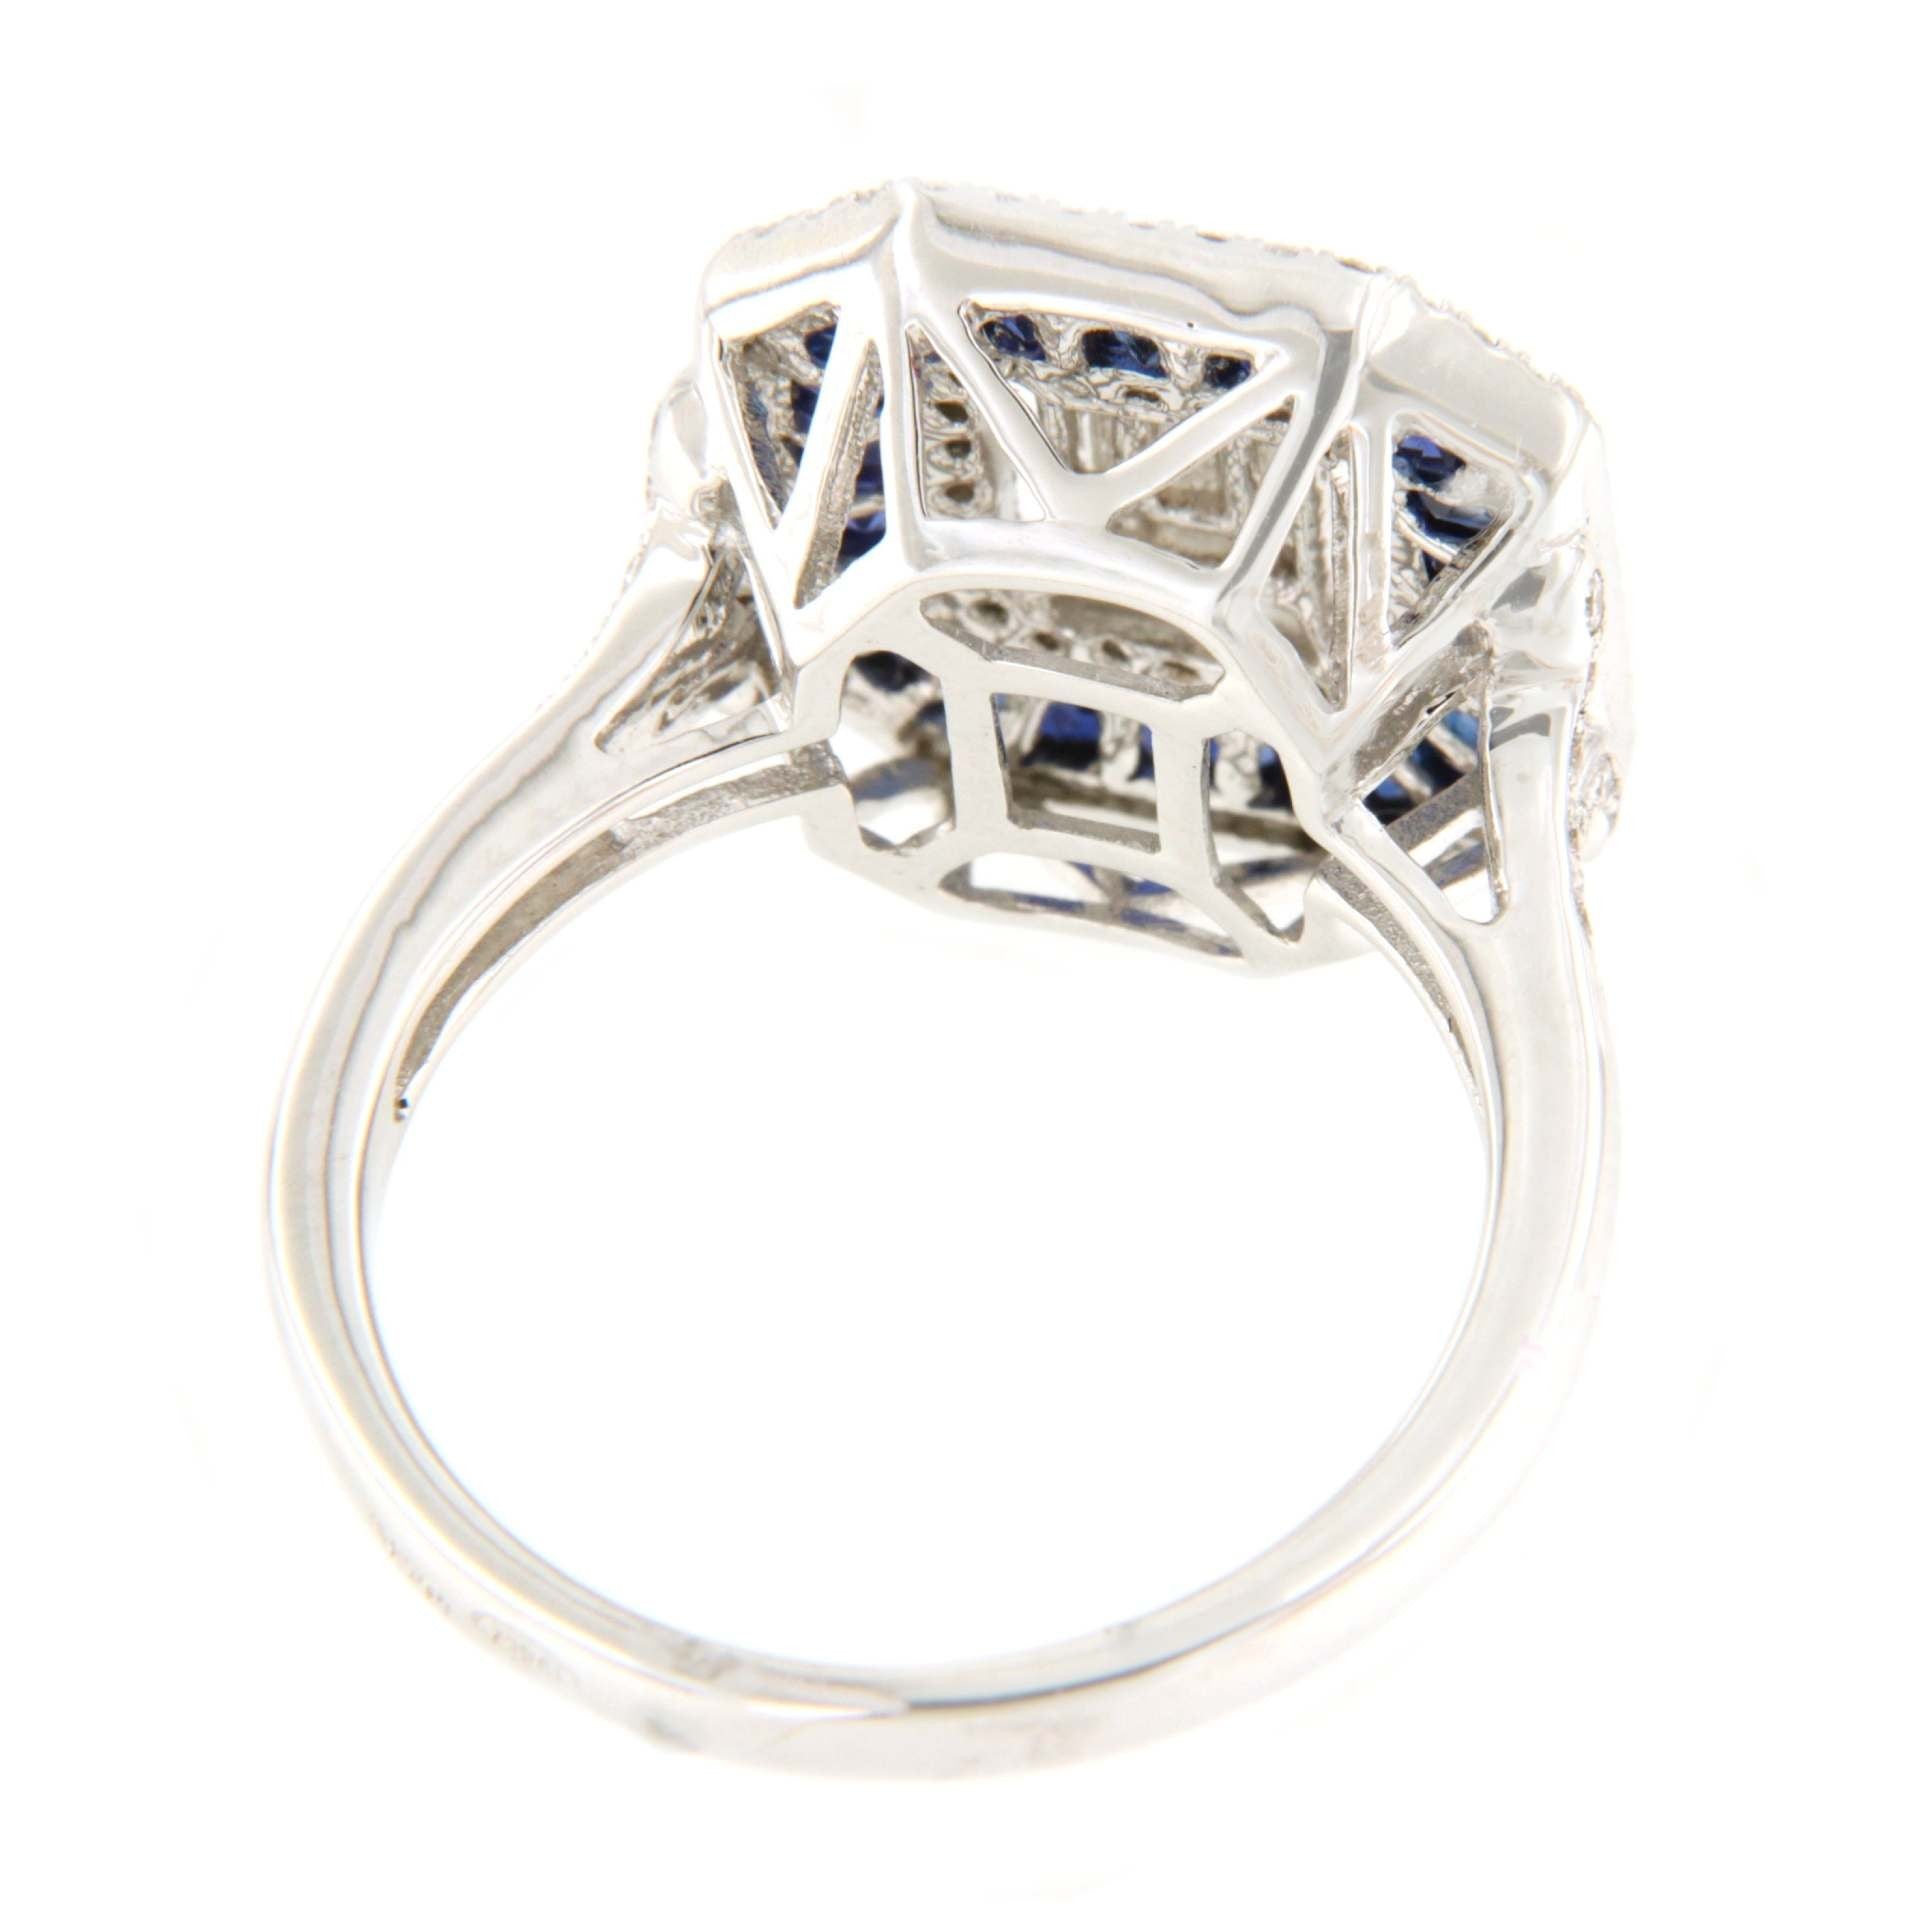 CYGNUS anillo rectangular oro blanco brillantes y zafiros